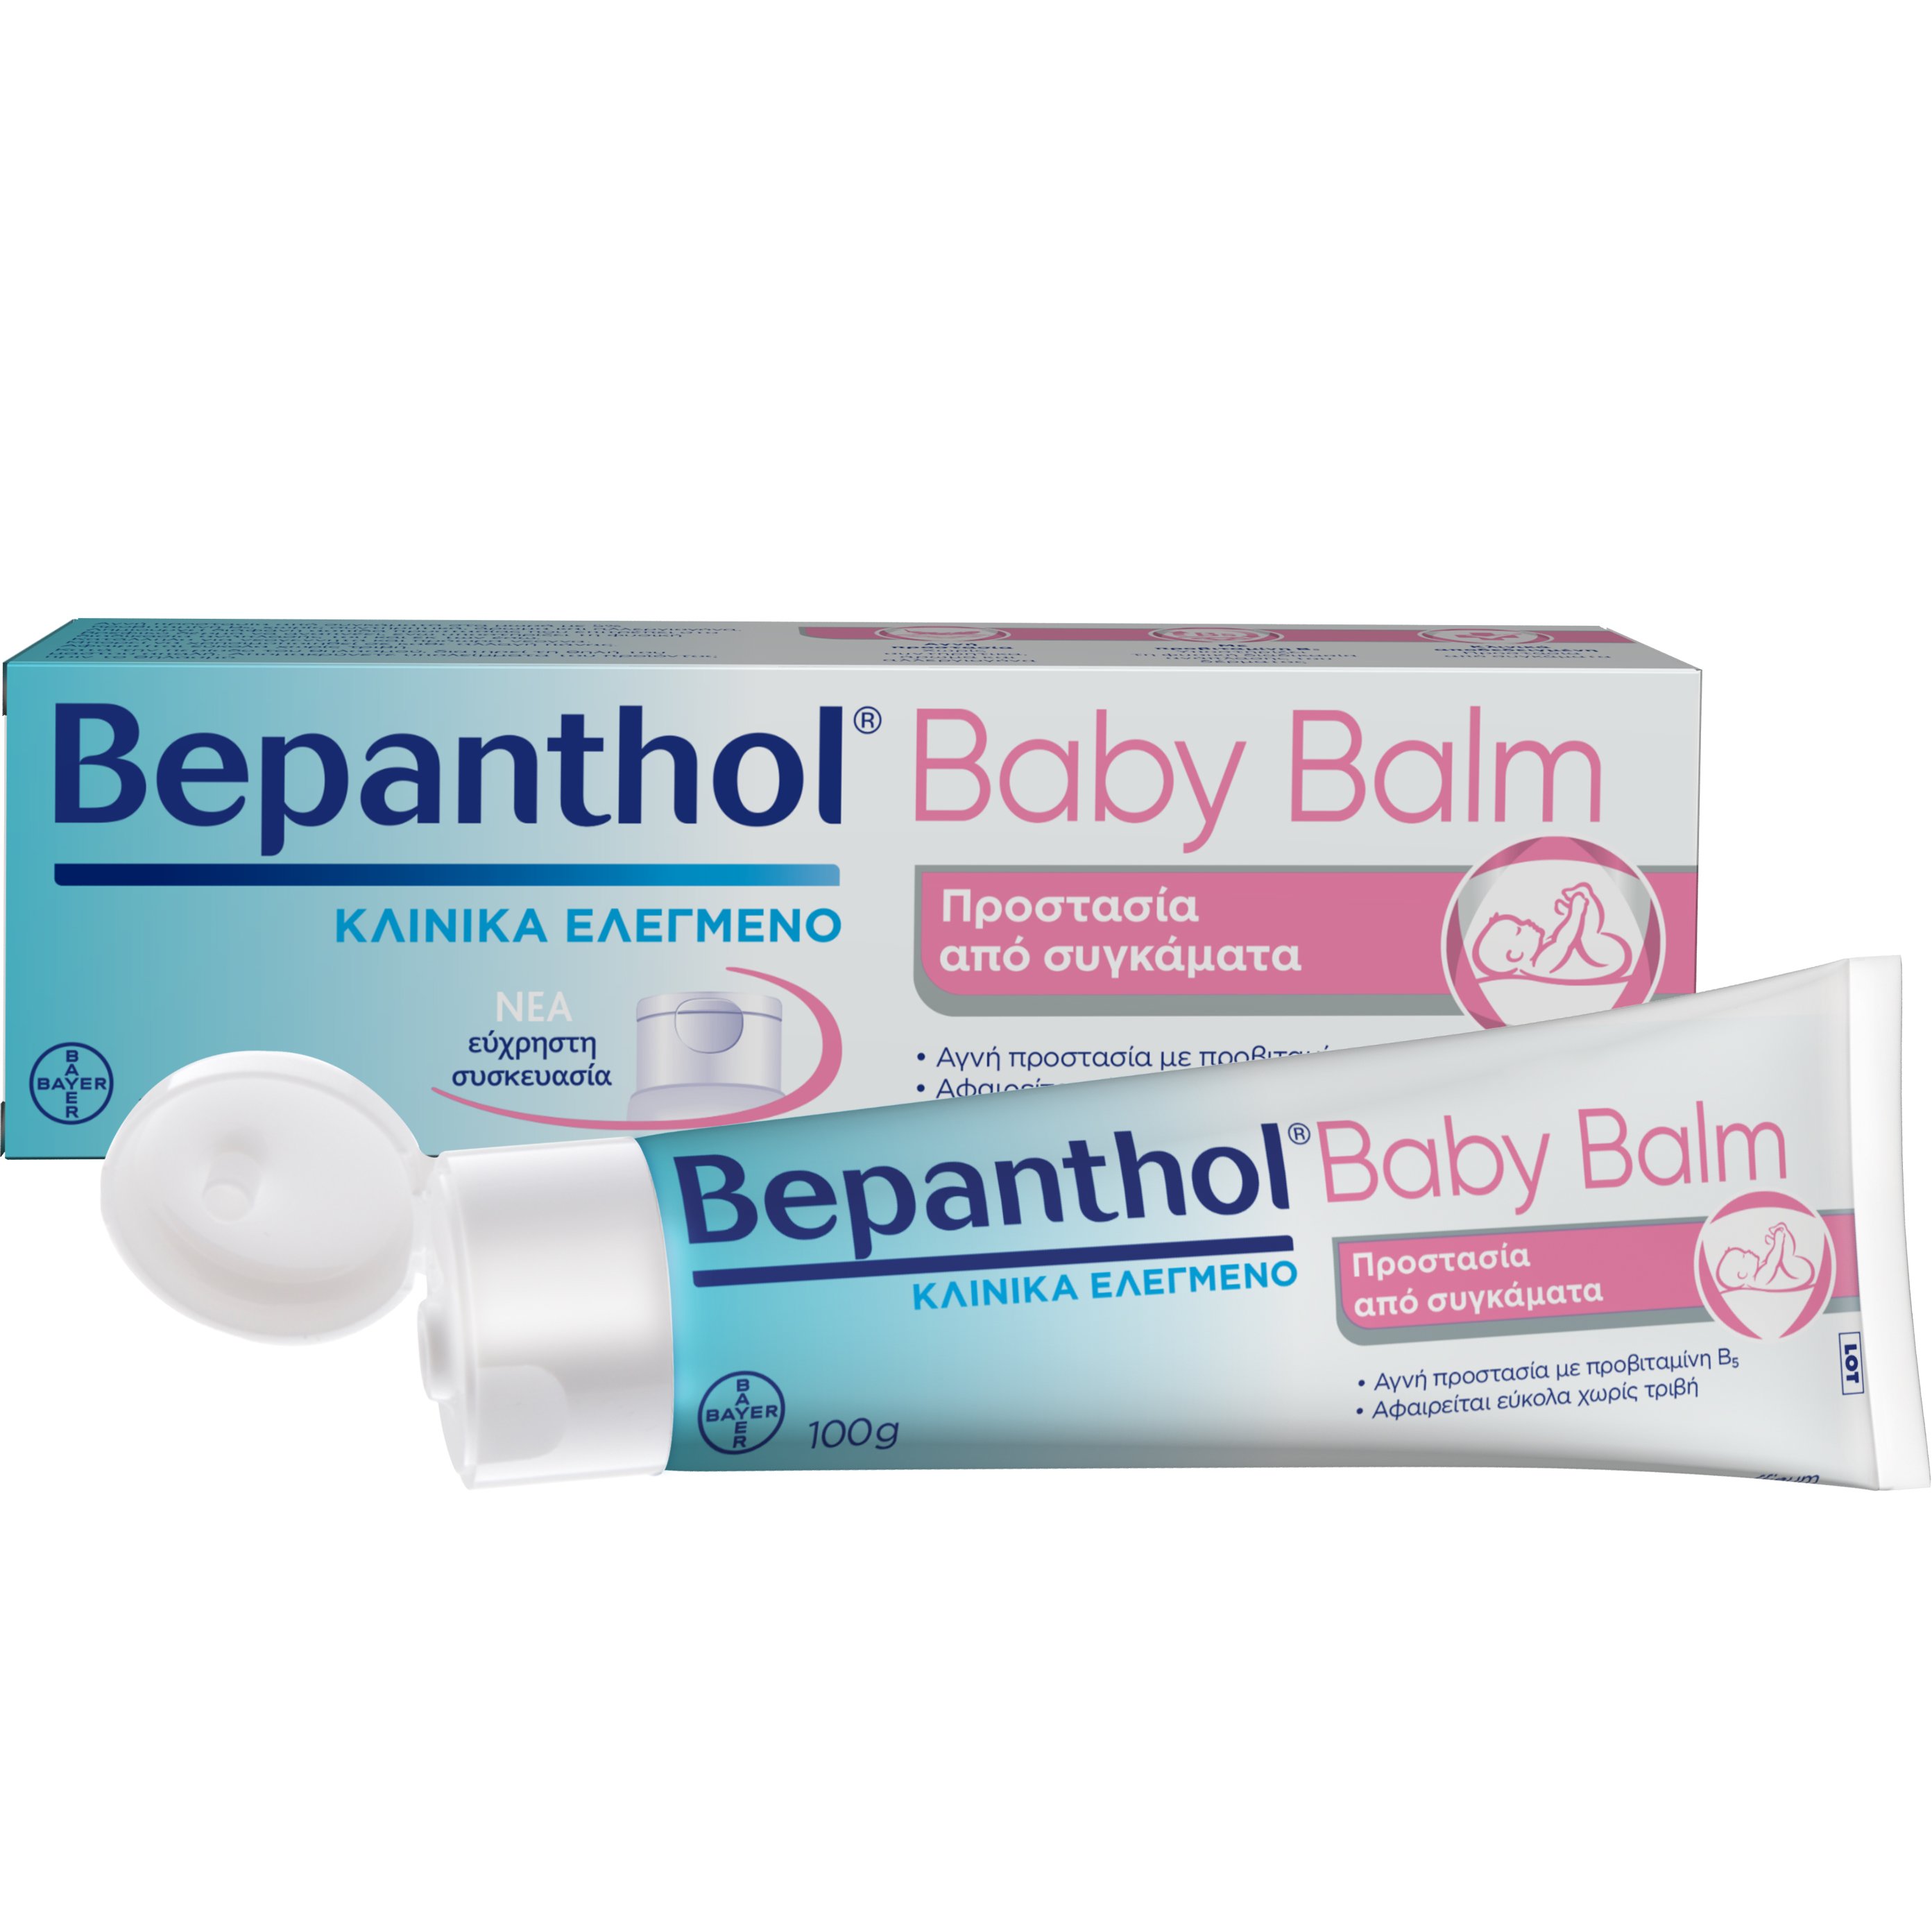 Bepanthol Bepanthol Baby Balm Κρέμα Προστασίας Κατά του Συγκάματος για Μωρά Κατάλληλη για Χρήση Μετά από Κάθε Αλλαγή Πάνας 100g